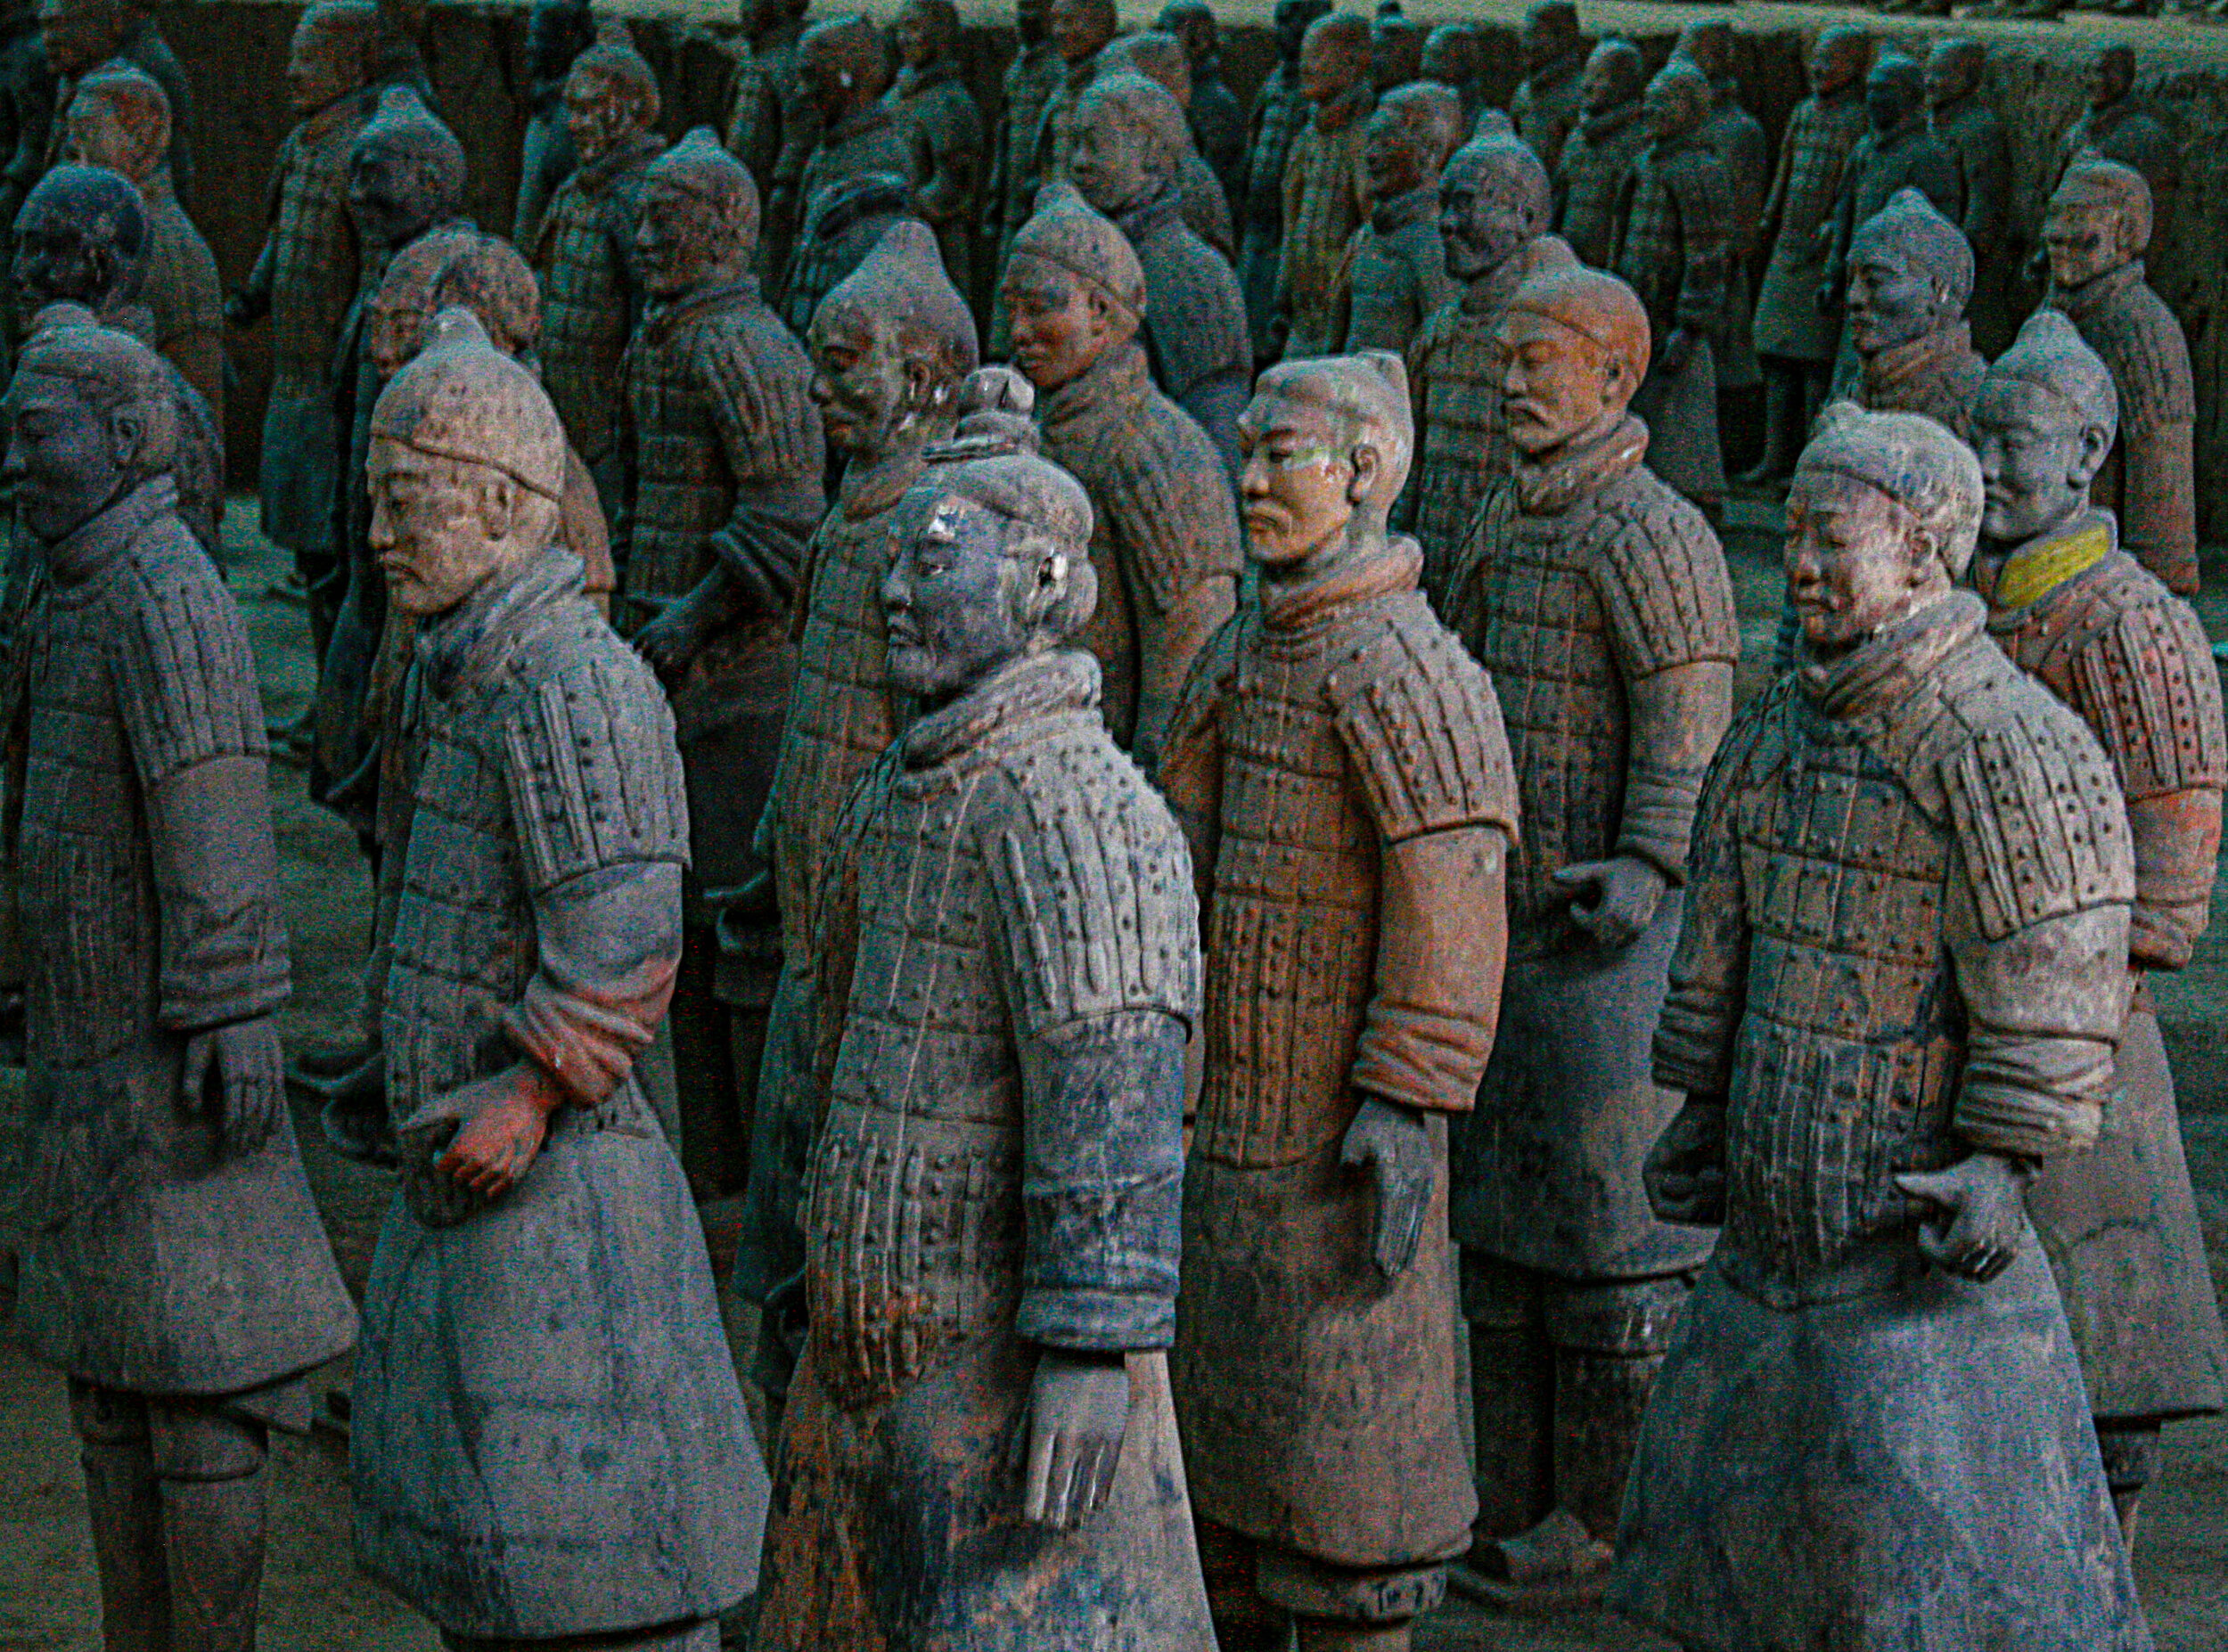  Terra Cotta Warriors, Xian, China         